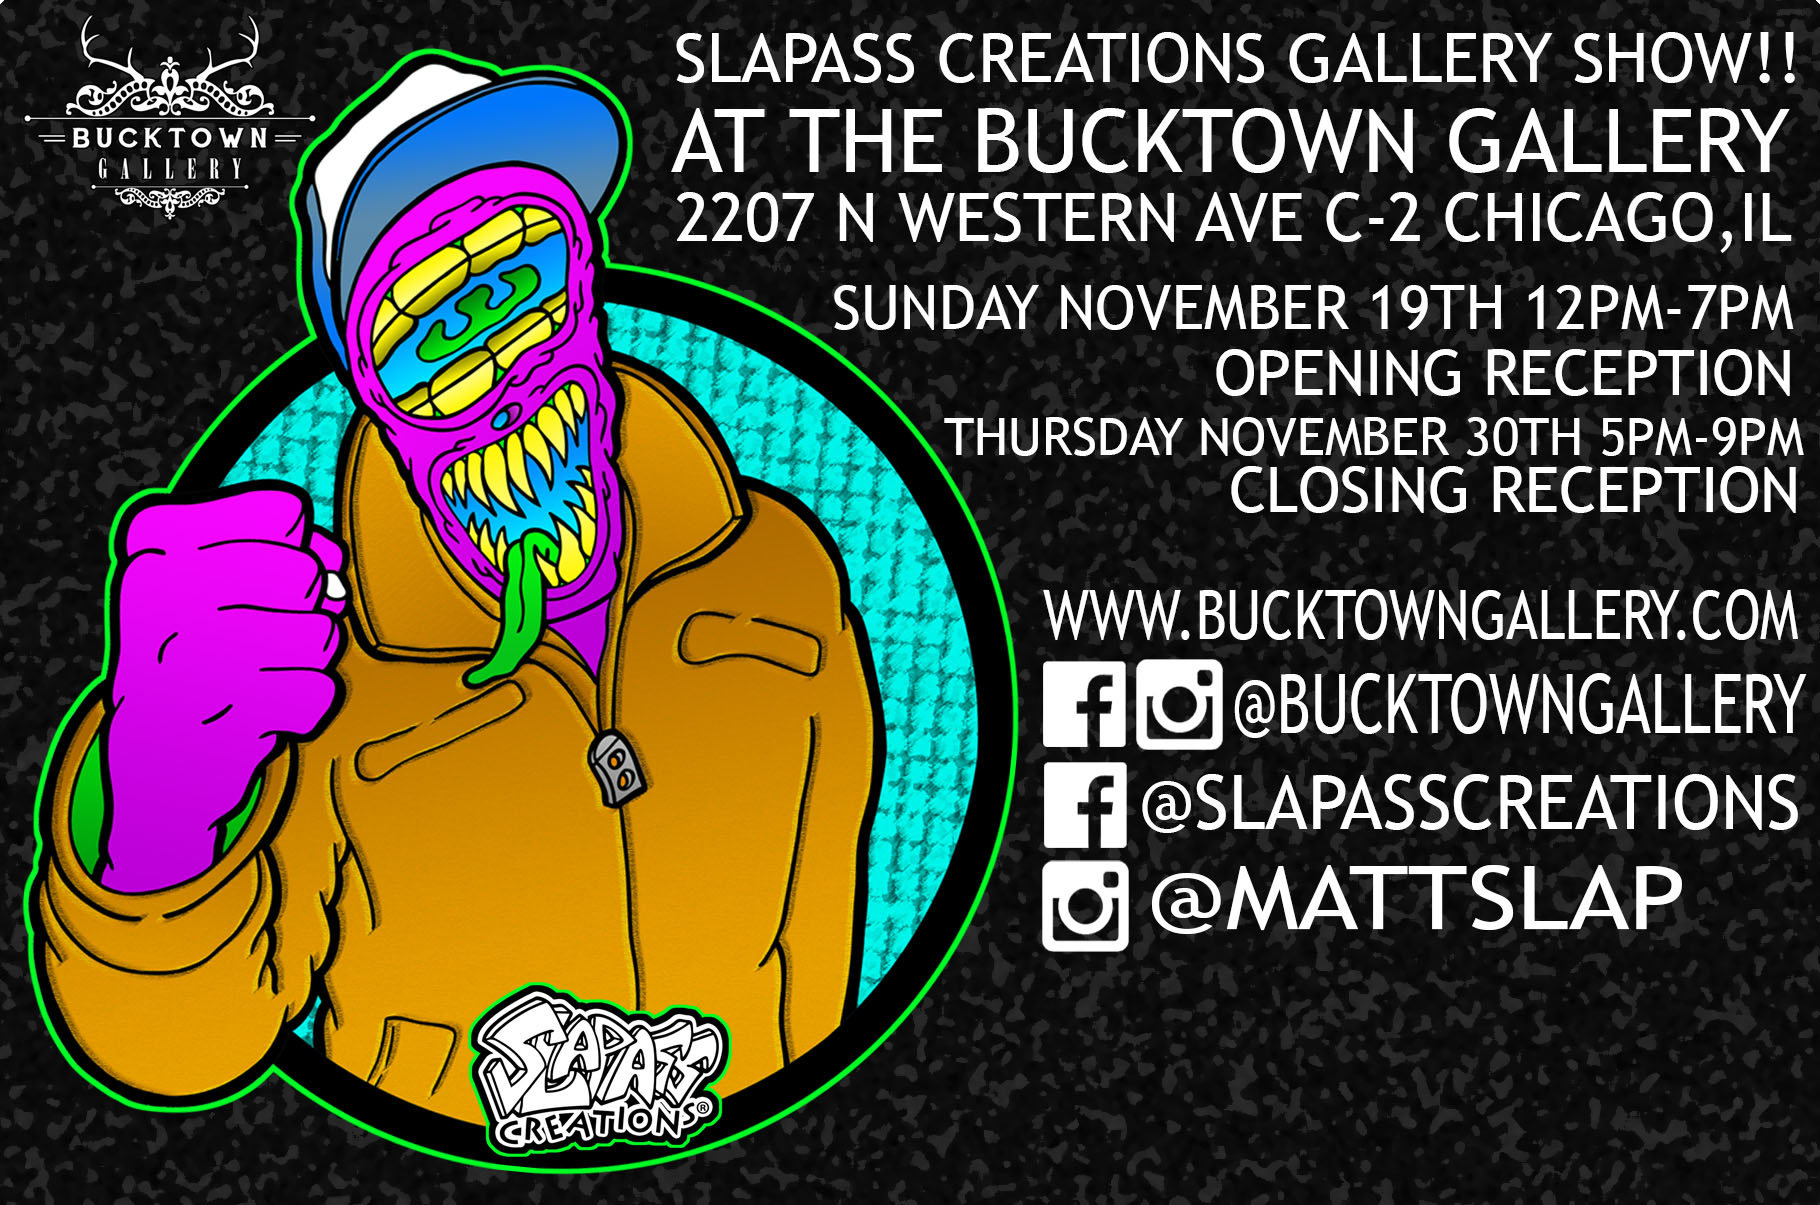 Slapass Creations Bucktown Gallery